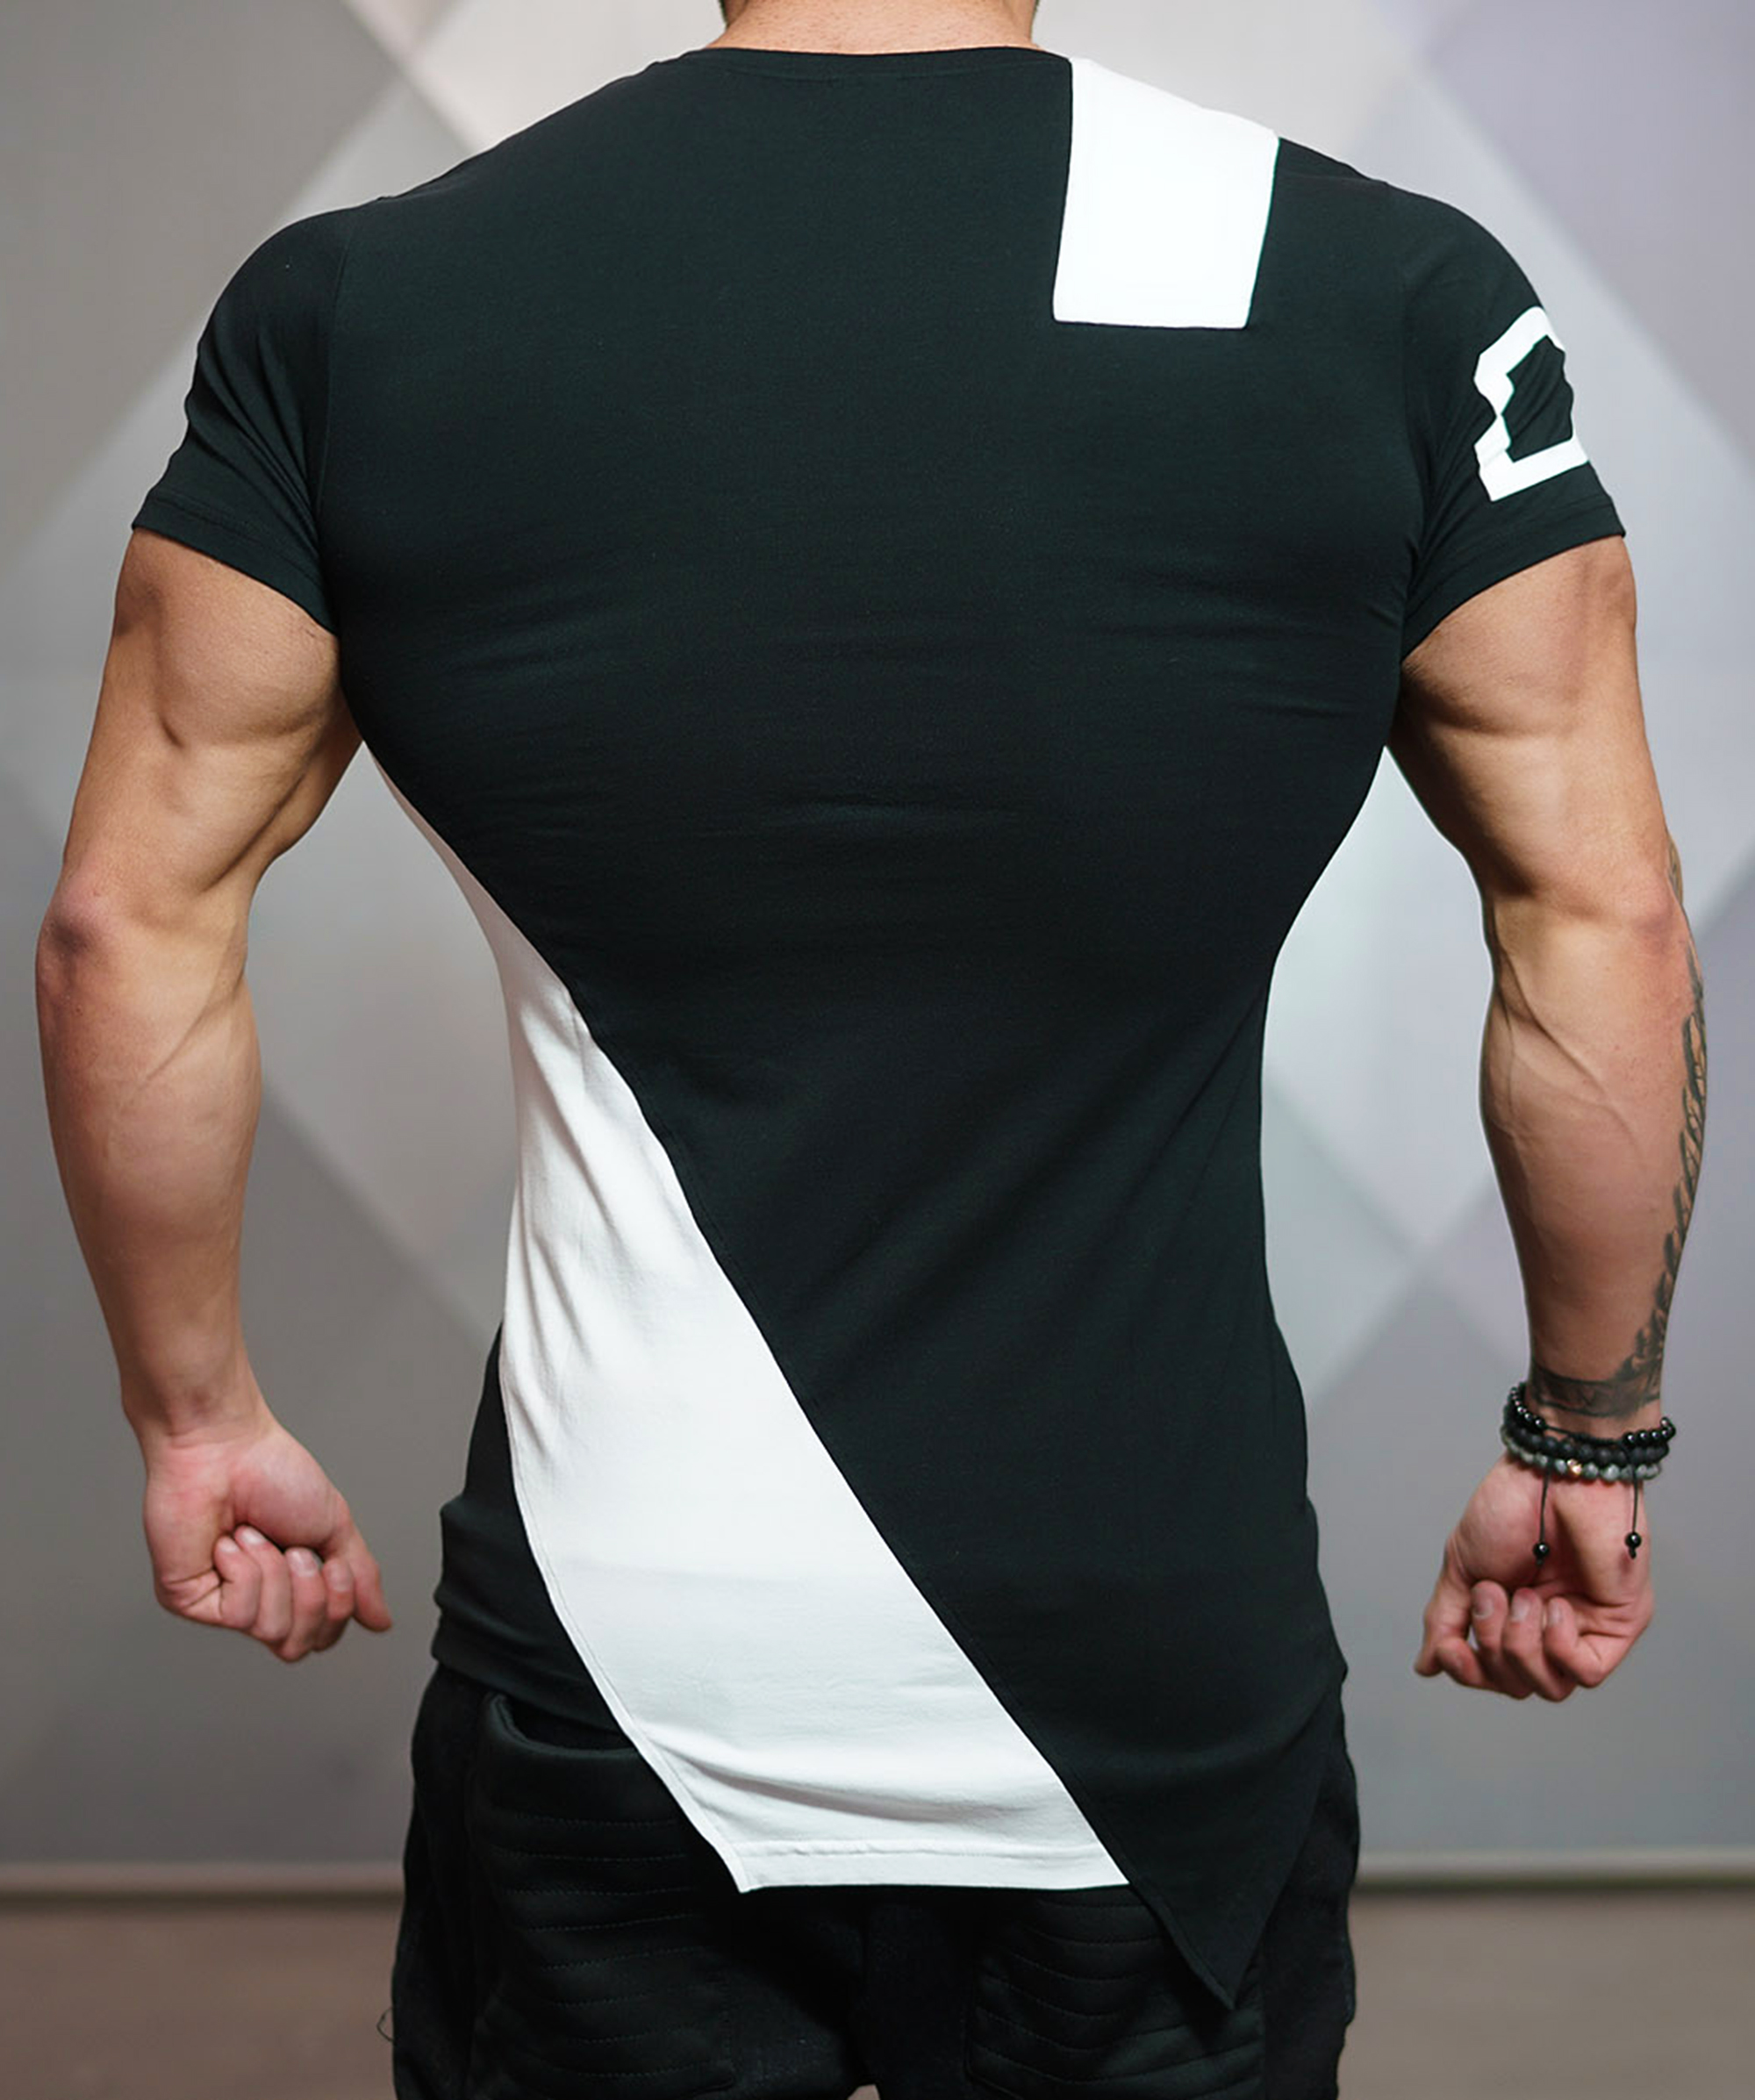 Buy Body Engineers Saw Cut Black White Dual Fabric Gym Workout Training ...